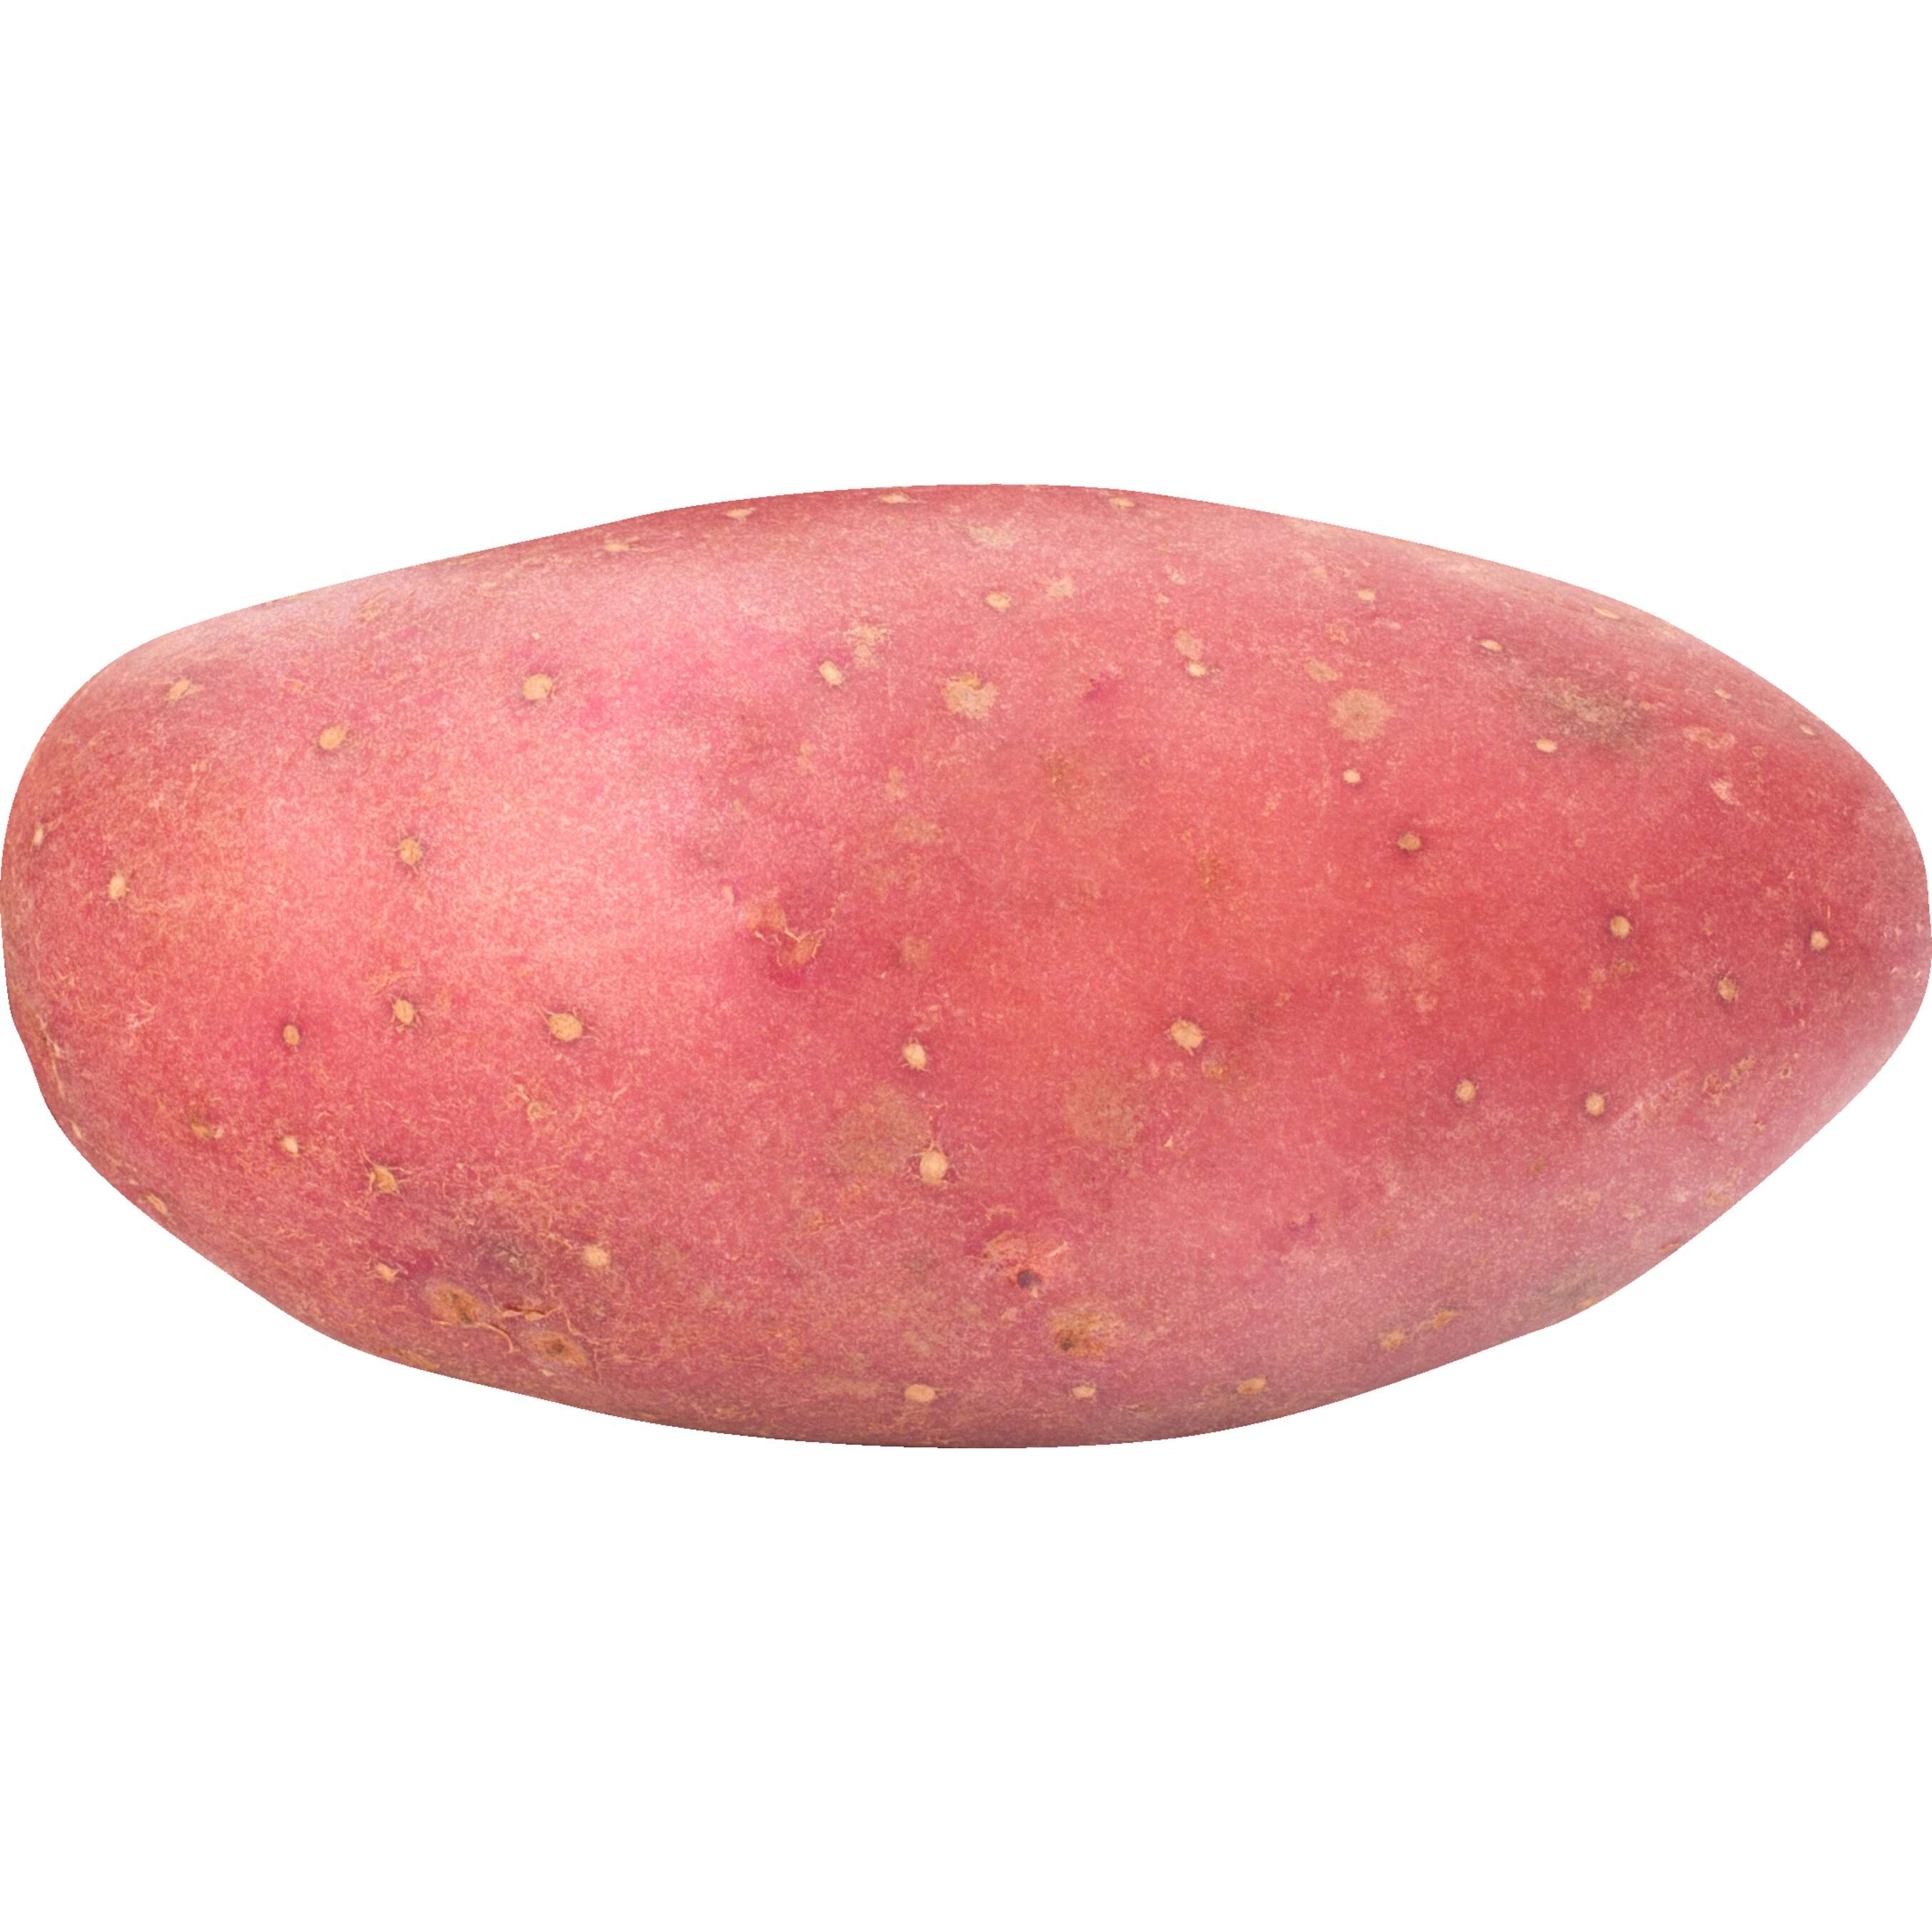 Изображение за продукта Червени картофи 